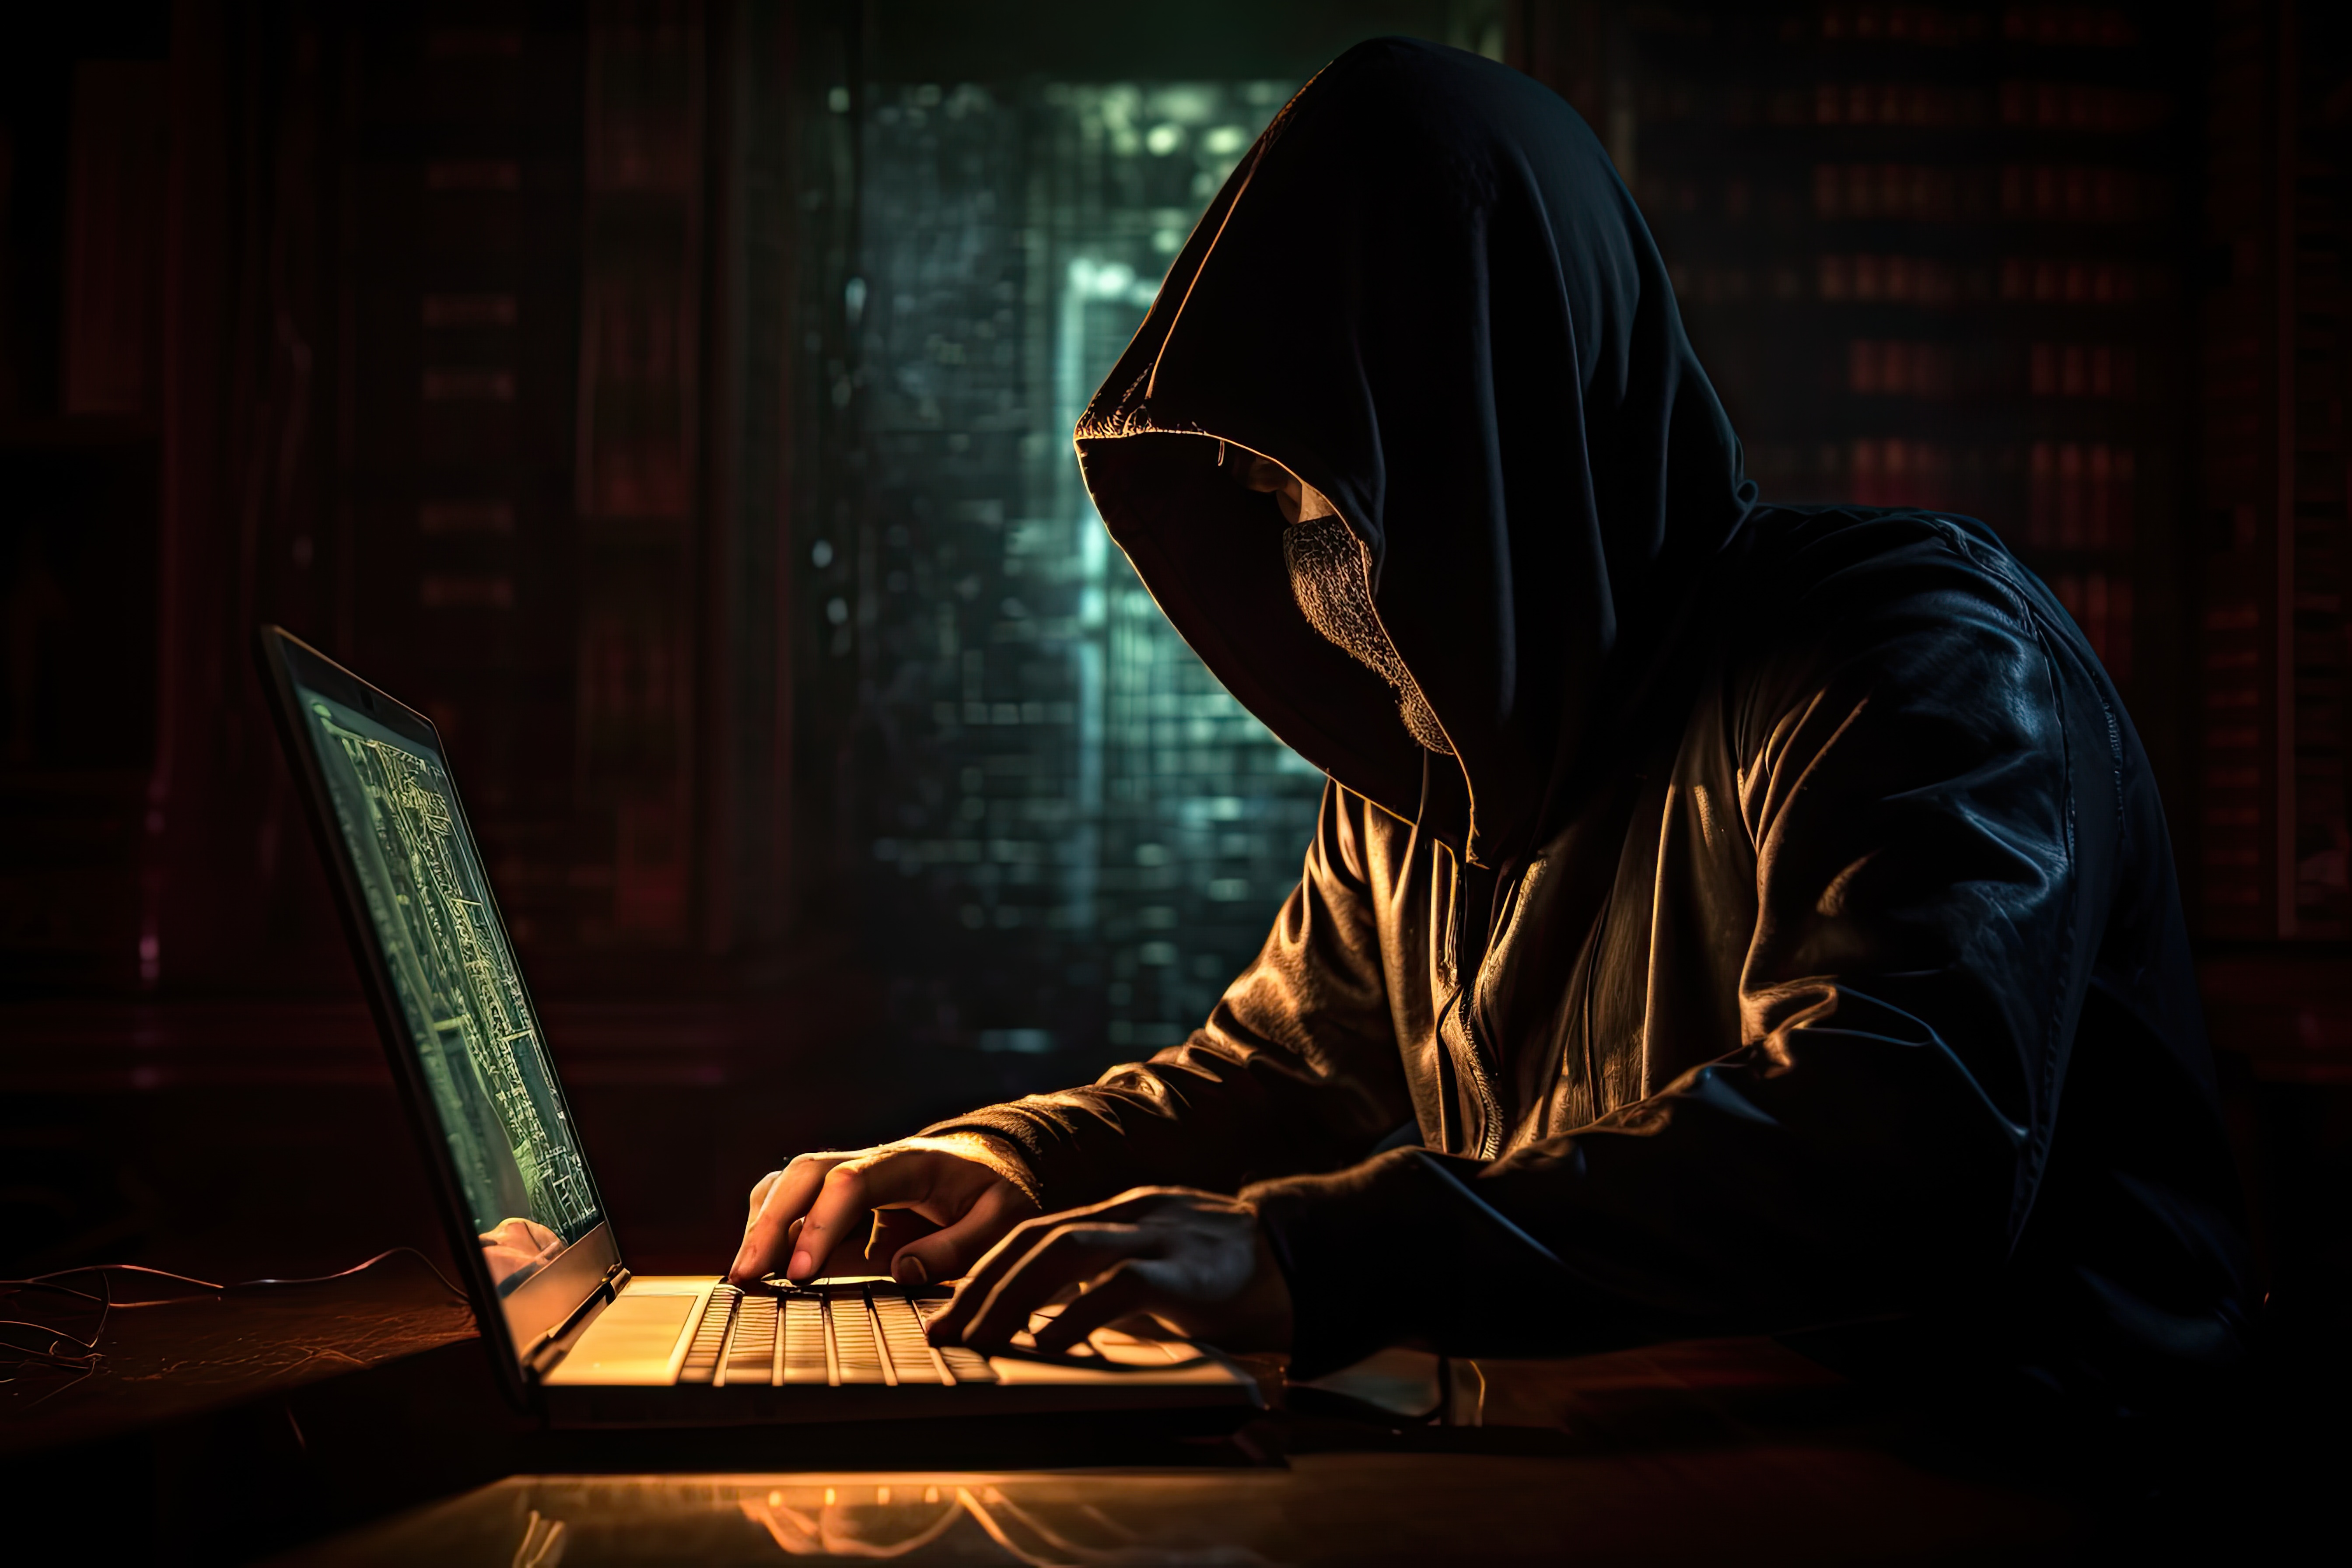 vecteezy_hooded-hacker-stealing-data-from-a-laptop-cybercrime_32475299 (1)